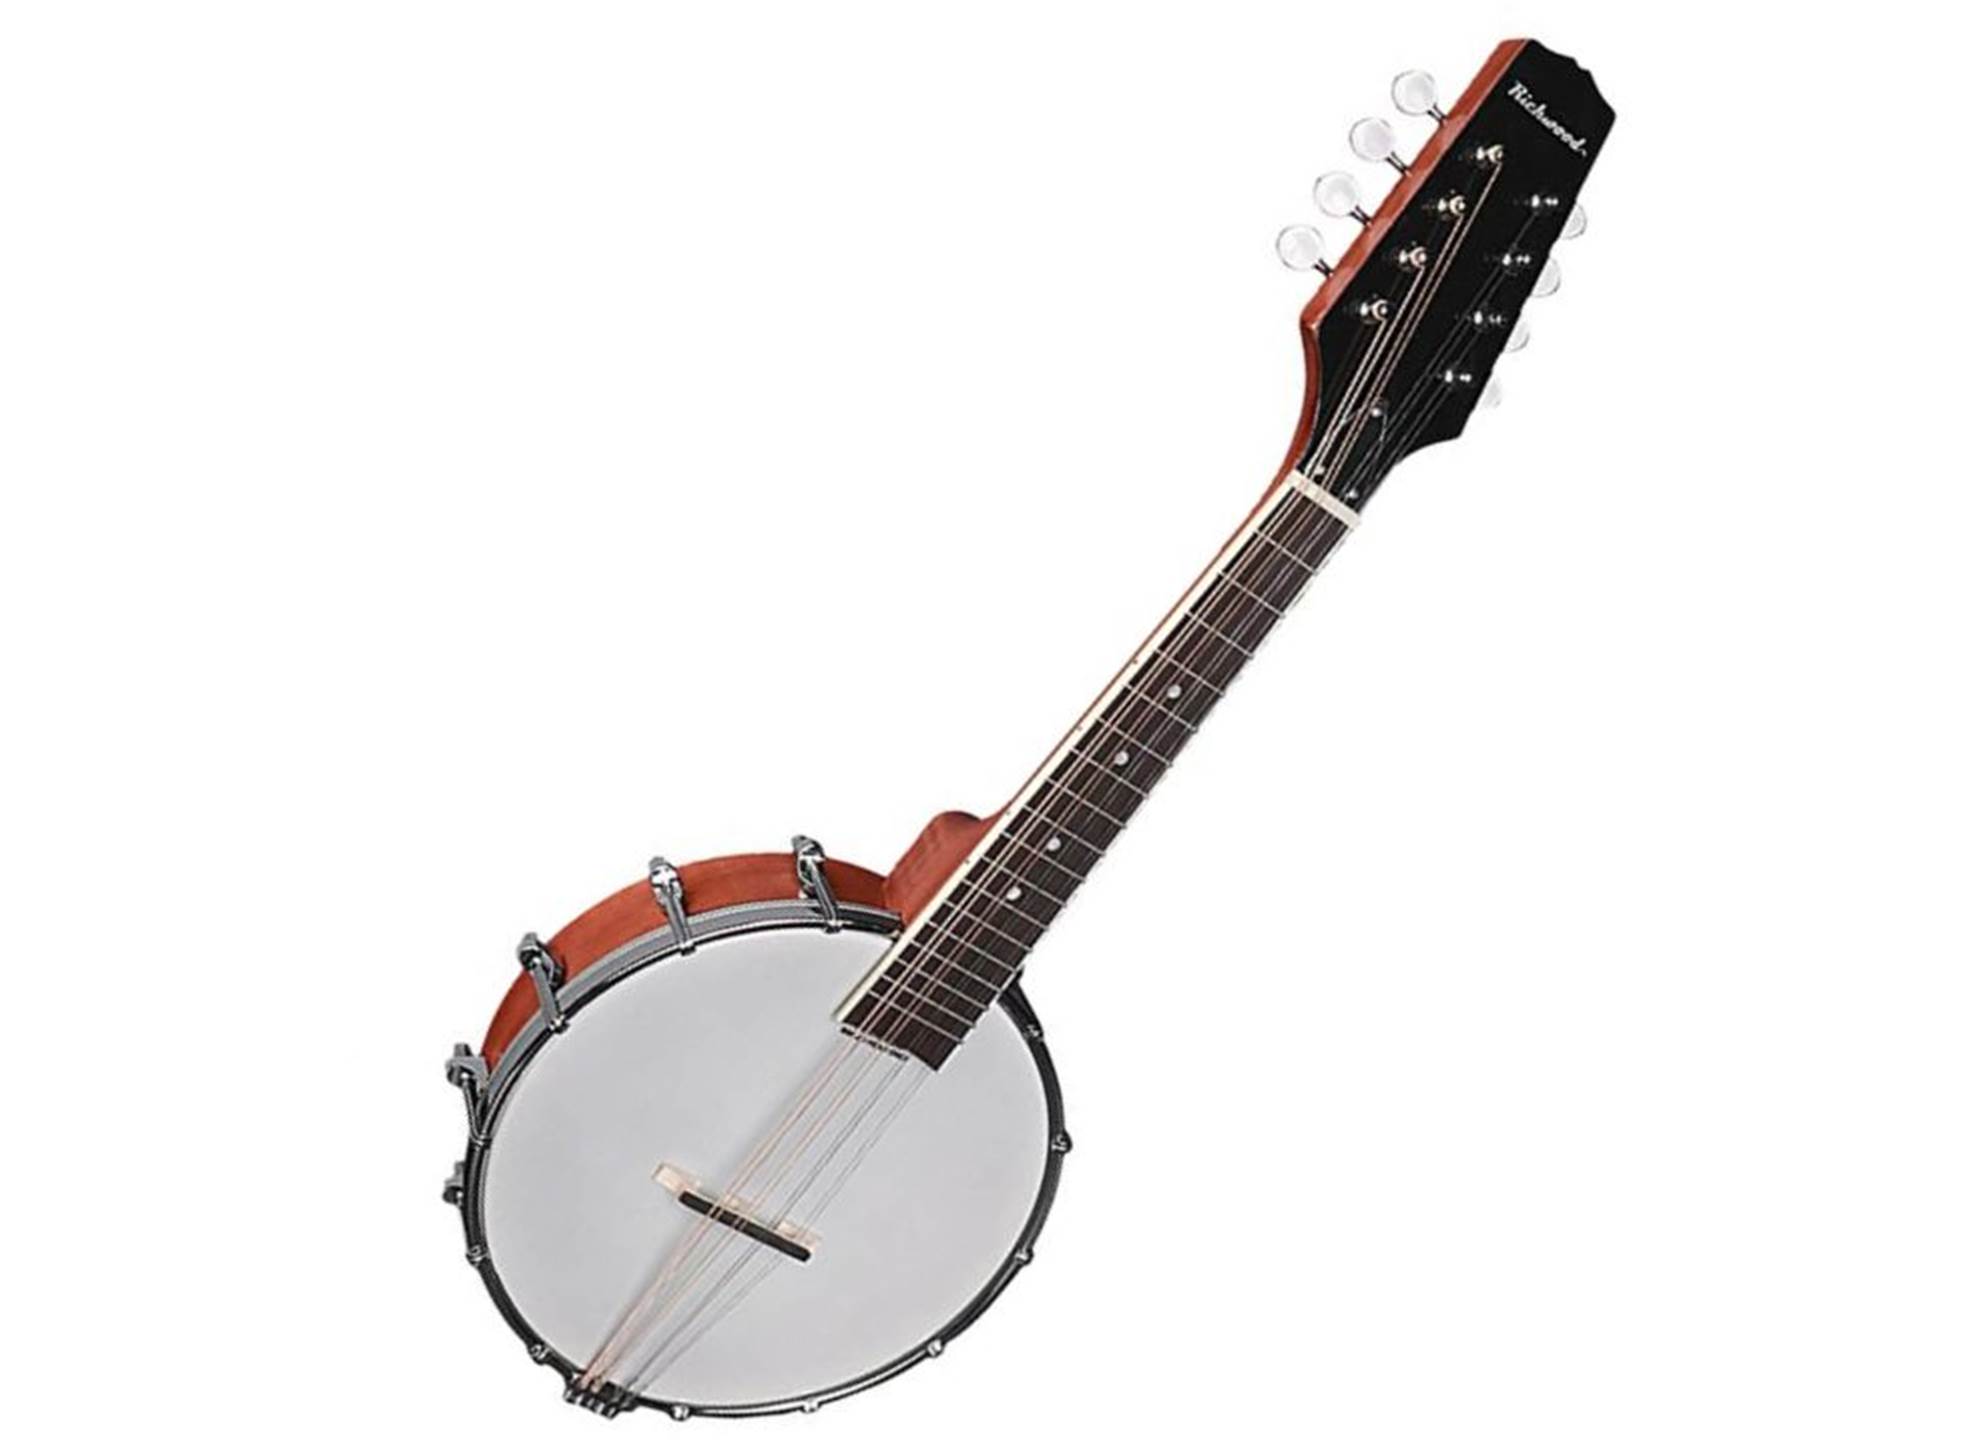 RMBM-408 Master Series Mandolin banjo